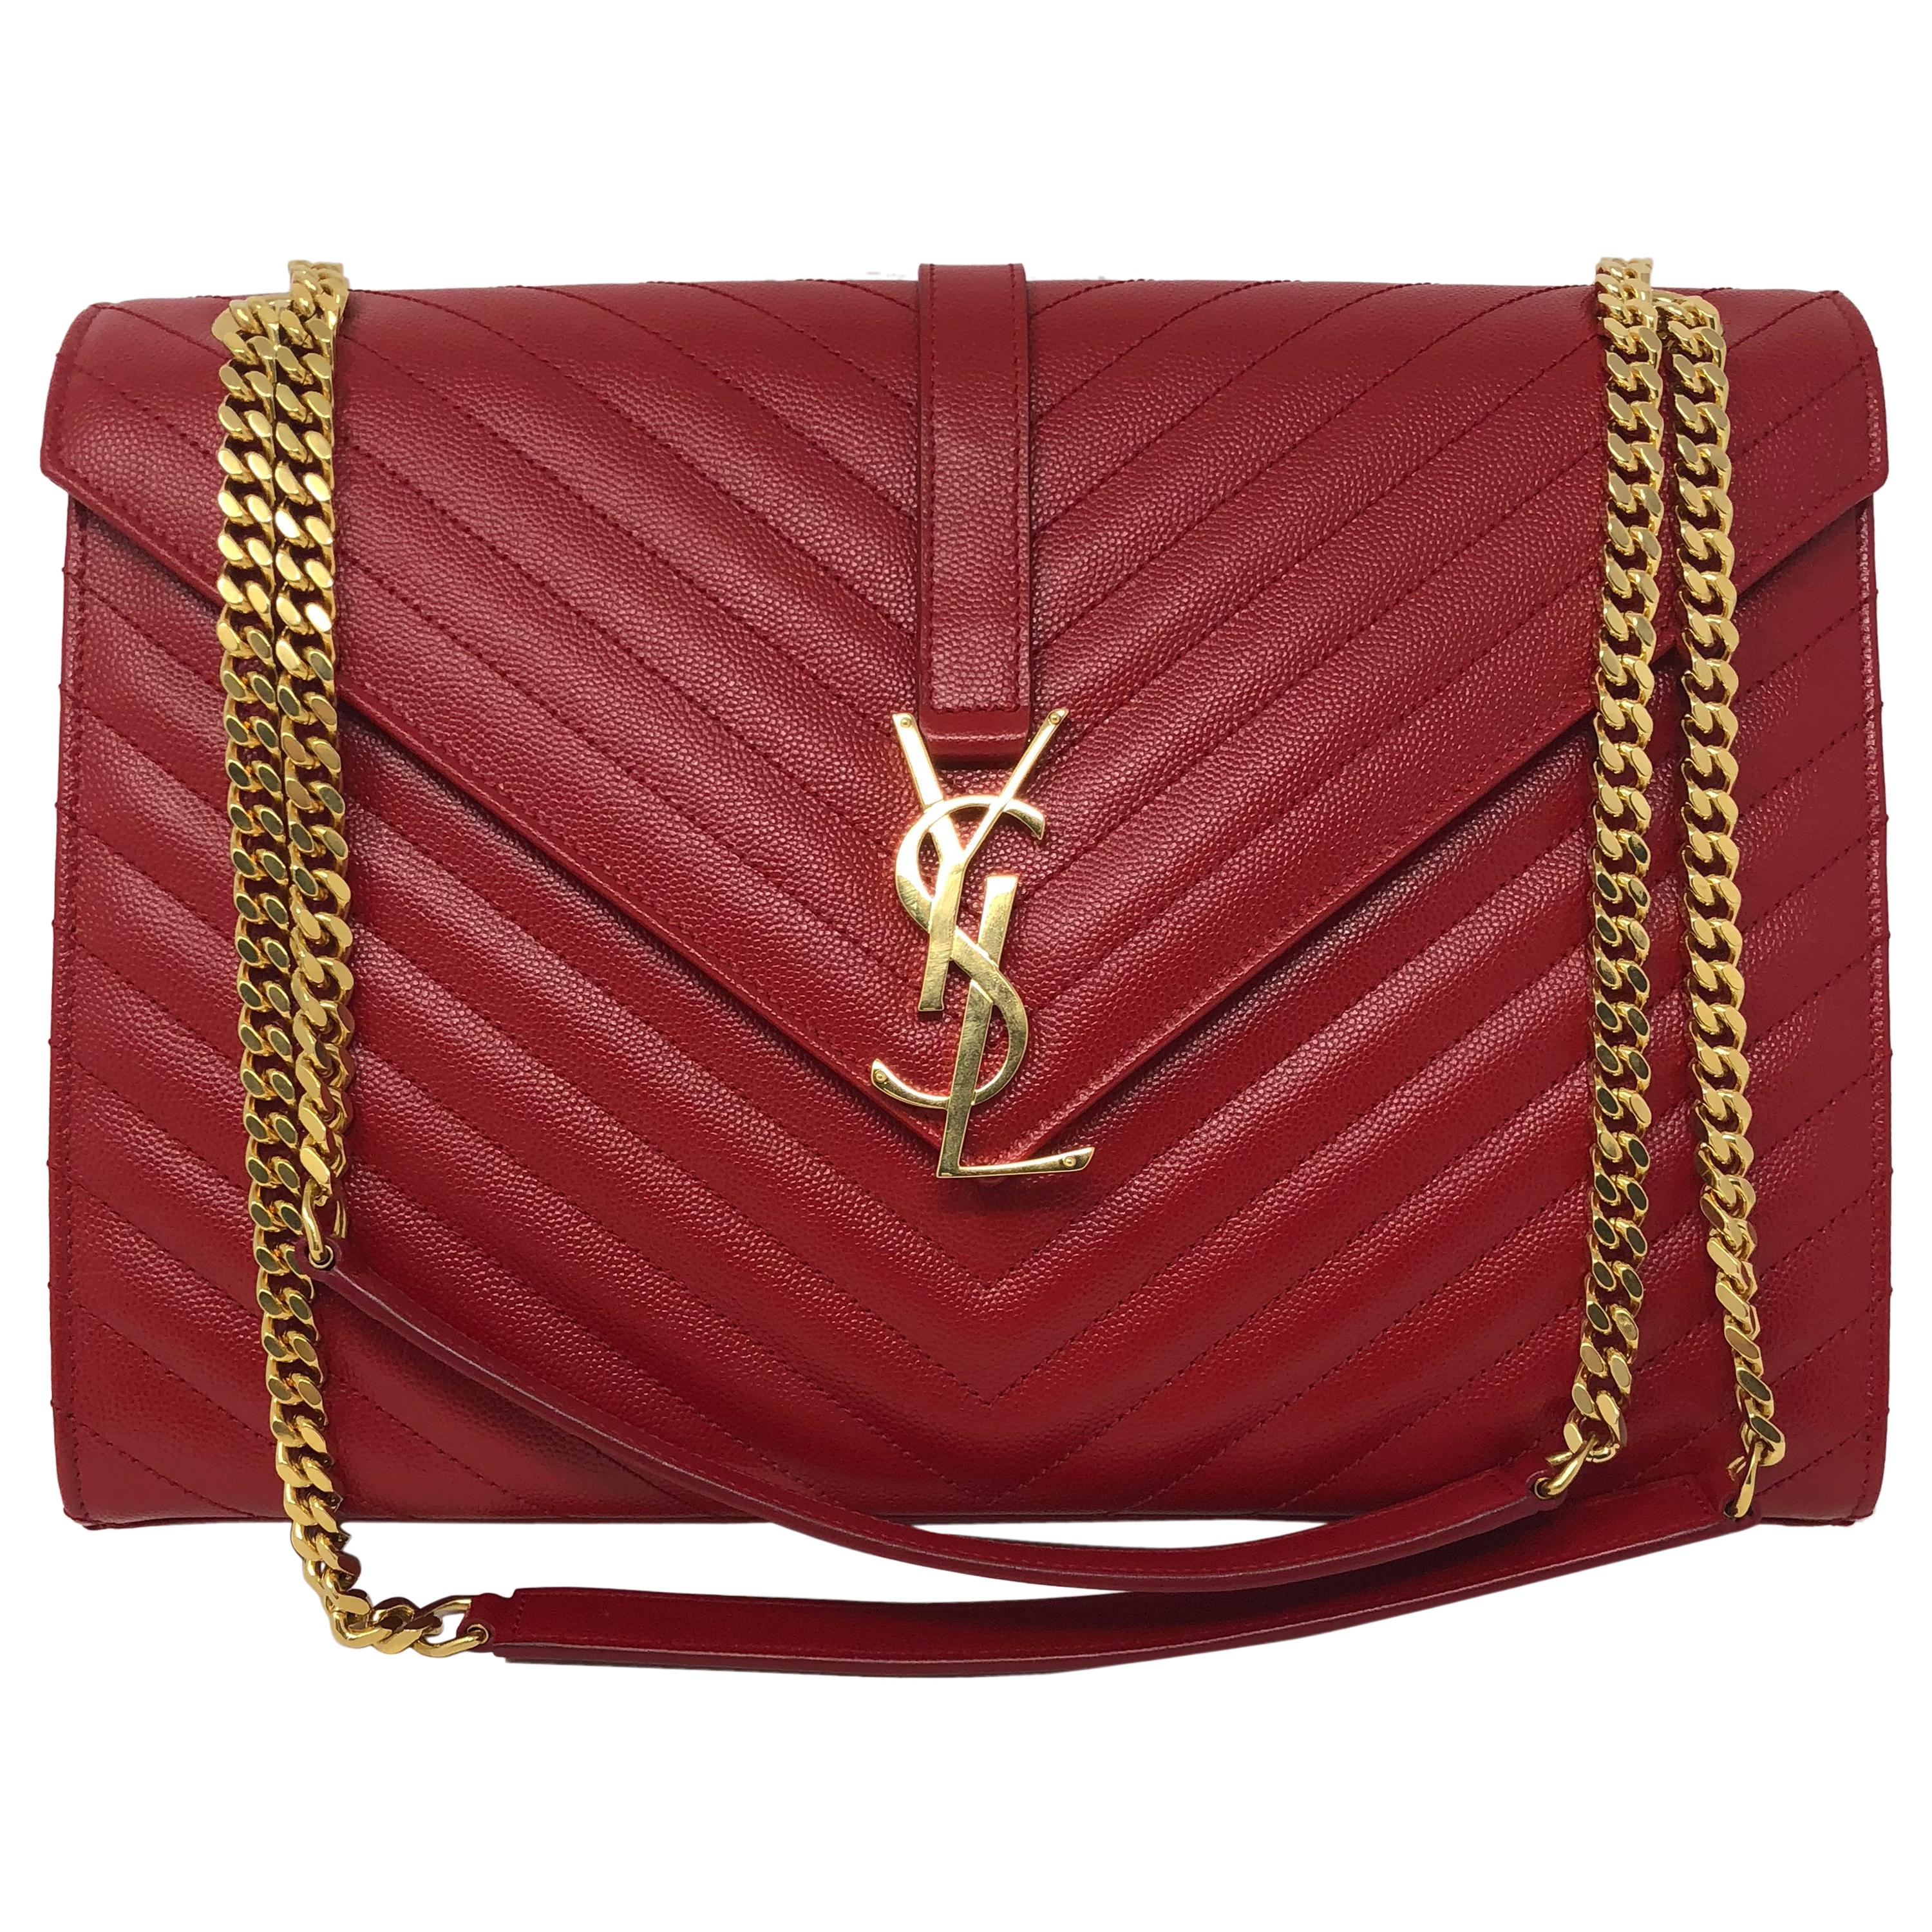 YSL Red Leather Large Matelasse Chain Shoulder Bag